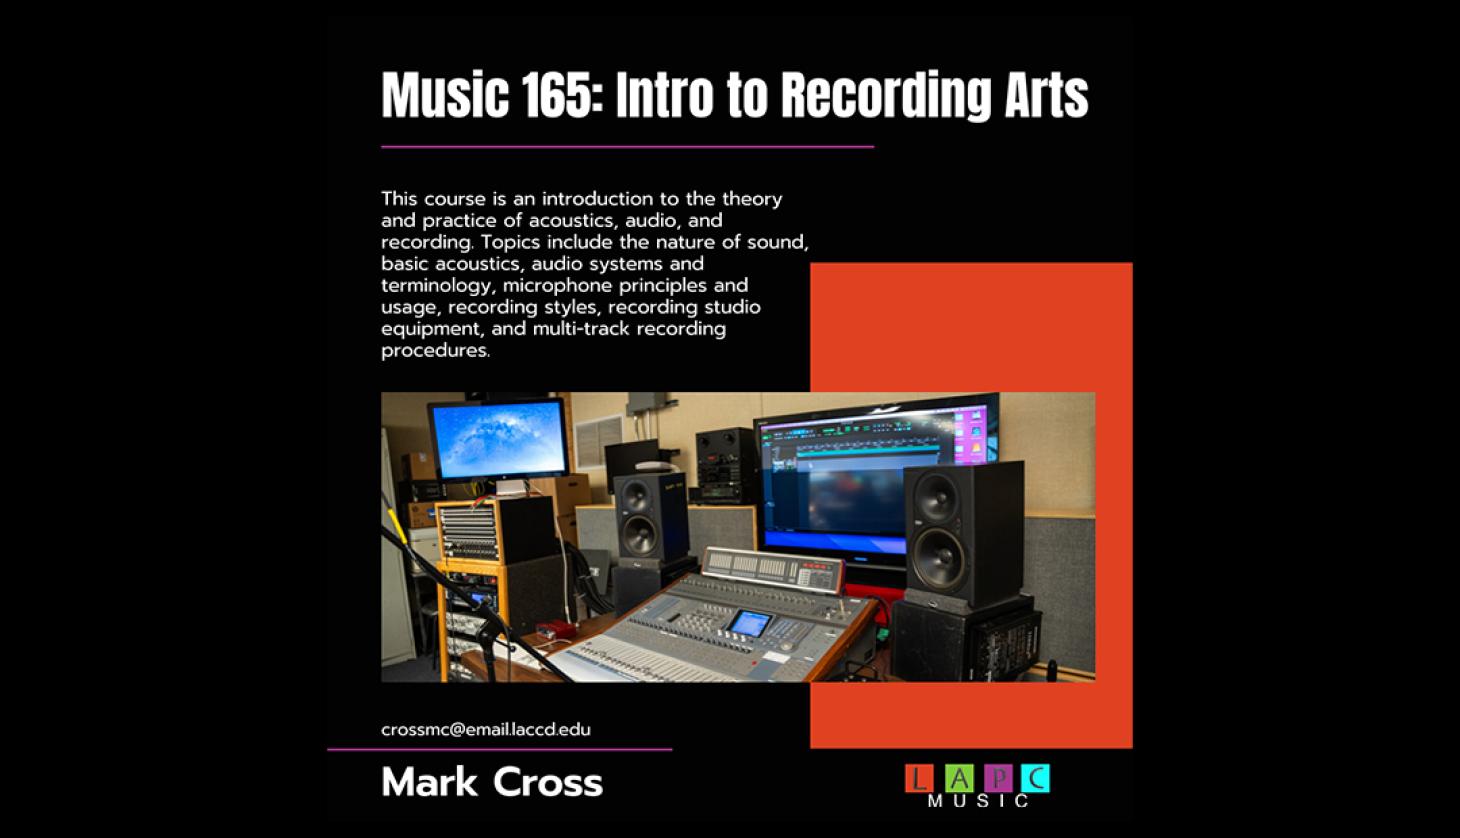 Music 165 - Intro to Recording Arts